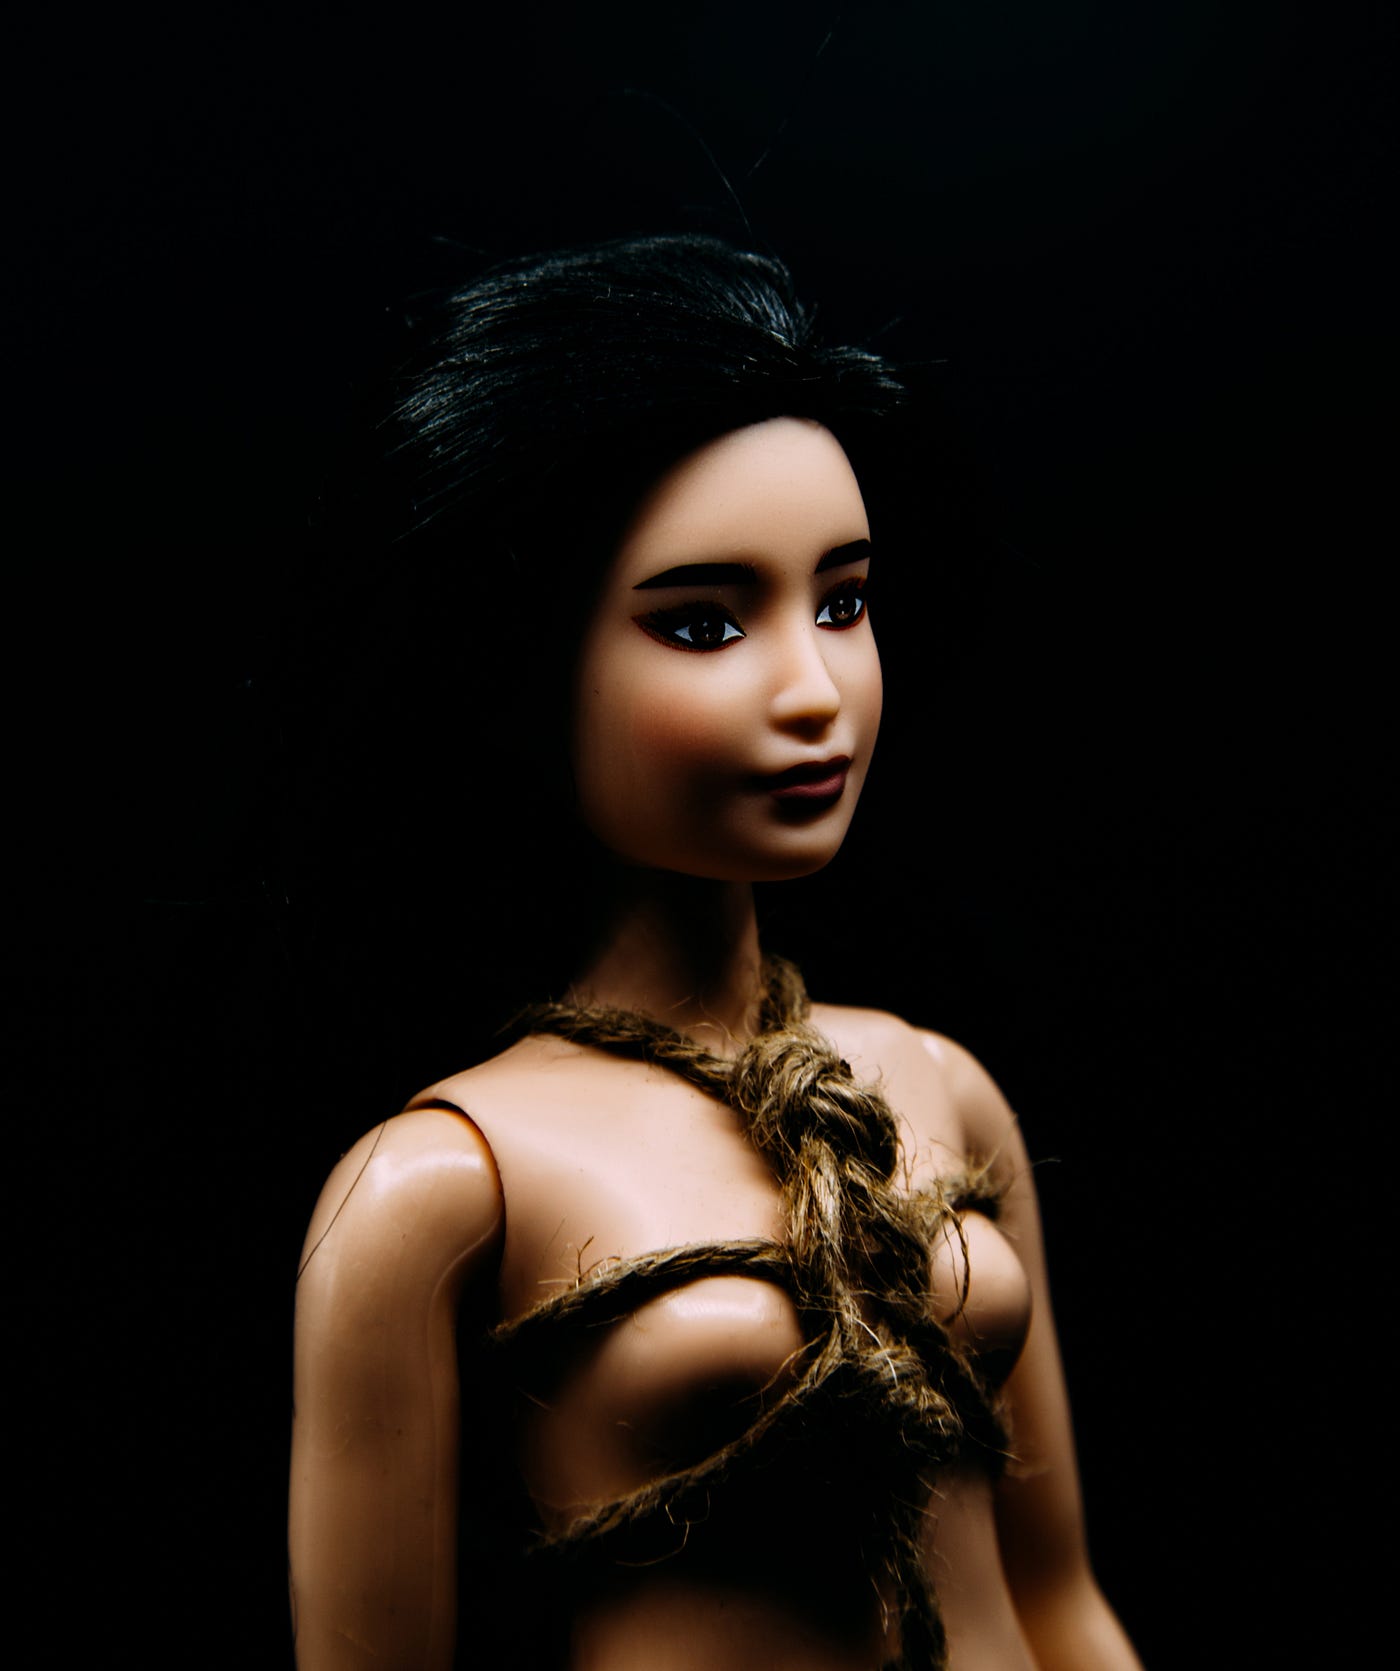 How To Buy a Sex Doll on Craigslist by Erika Diegel Martin Medium